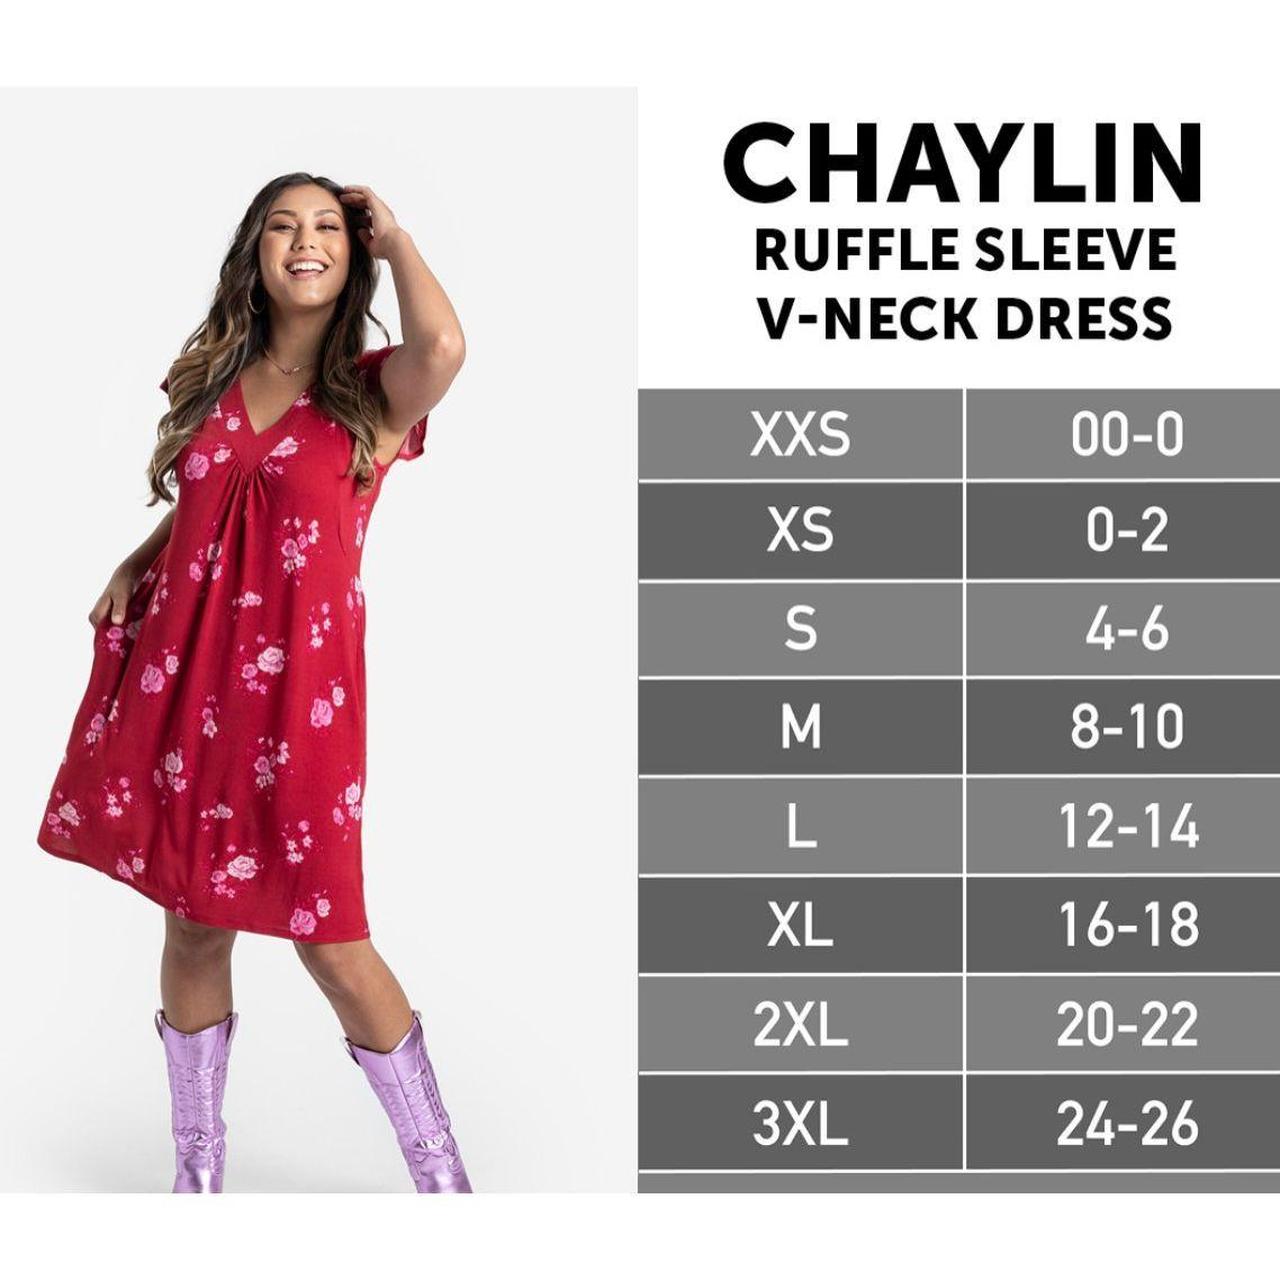 LuLaRoe Chaylin Ruffle Sleeve V-Neck Dress Review